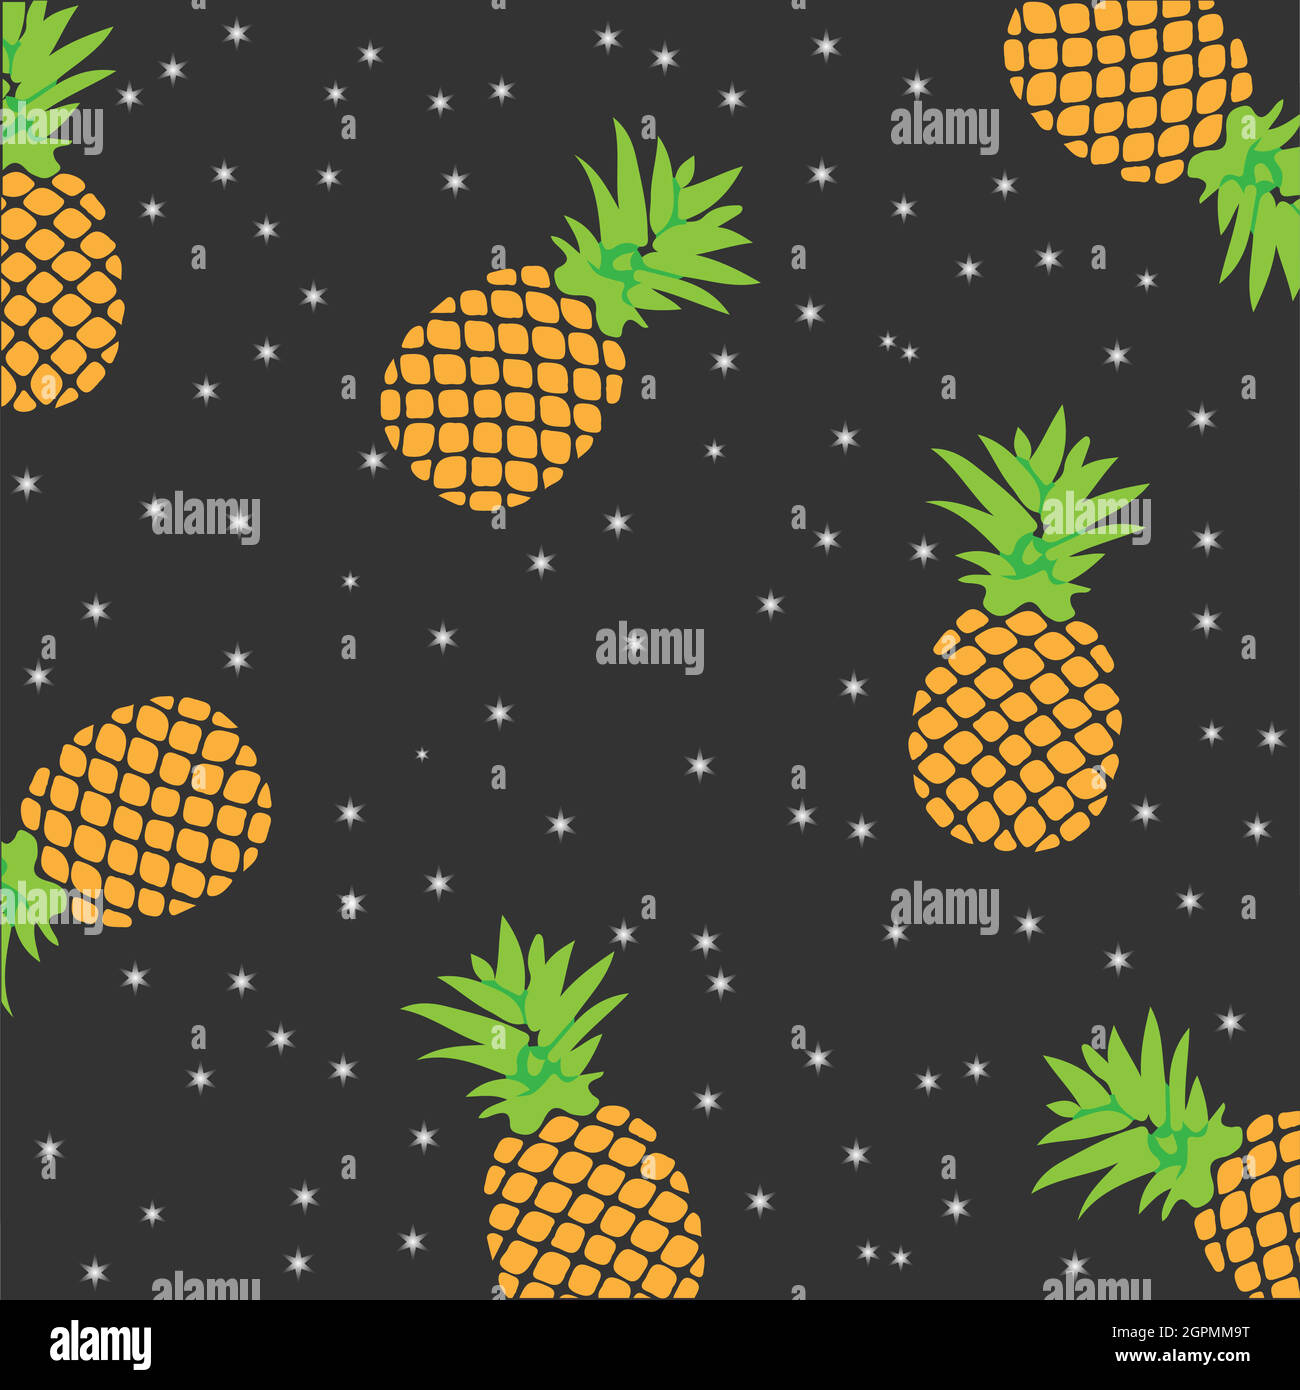 20400 Pineapple Background Illustrations RoyaltyFree Vector Graphics   Clip Art  iStock  Tropical background Mango Blackberry background